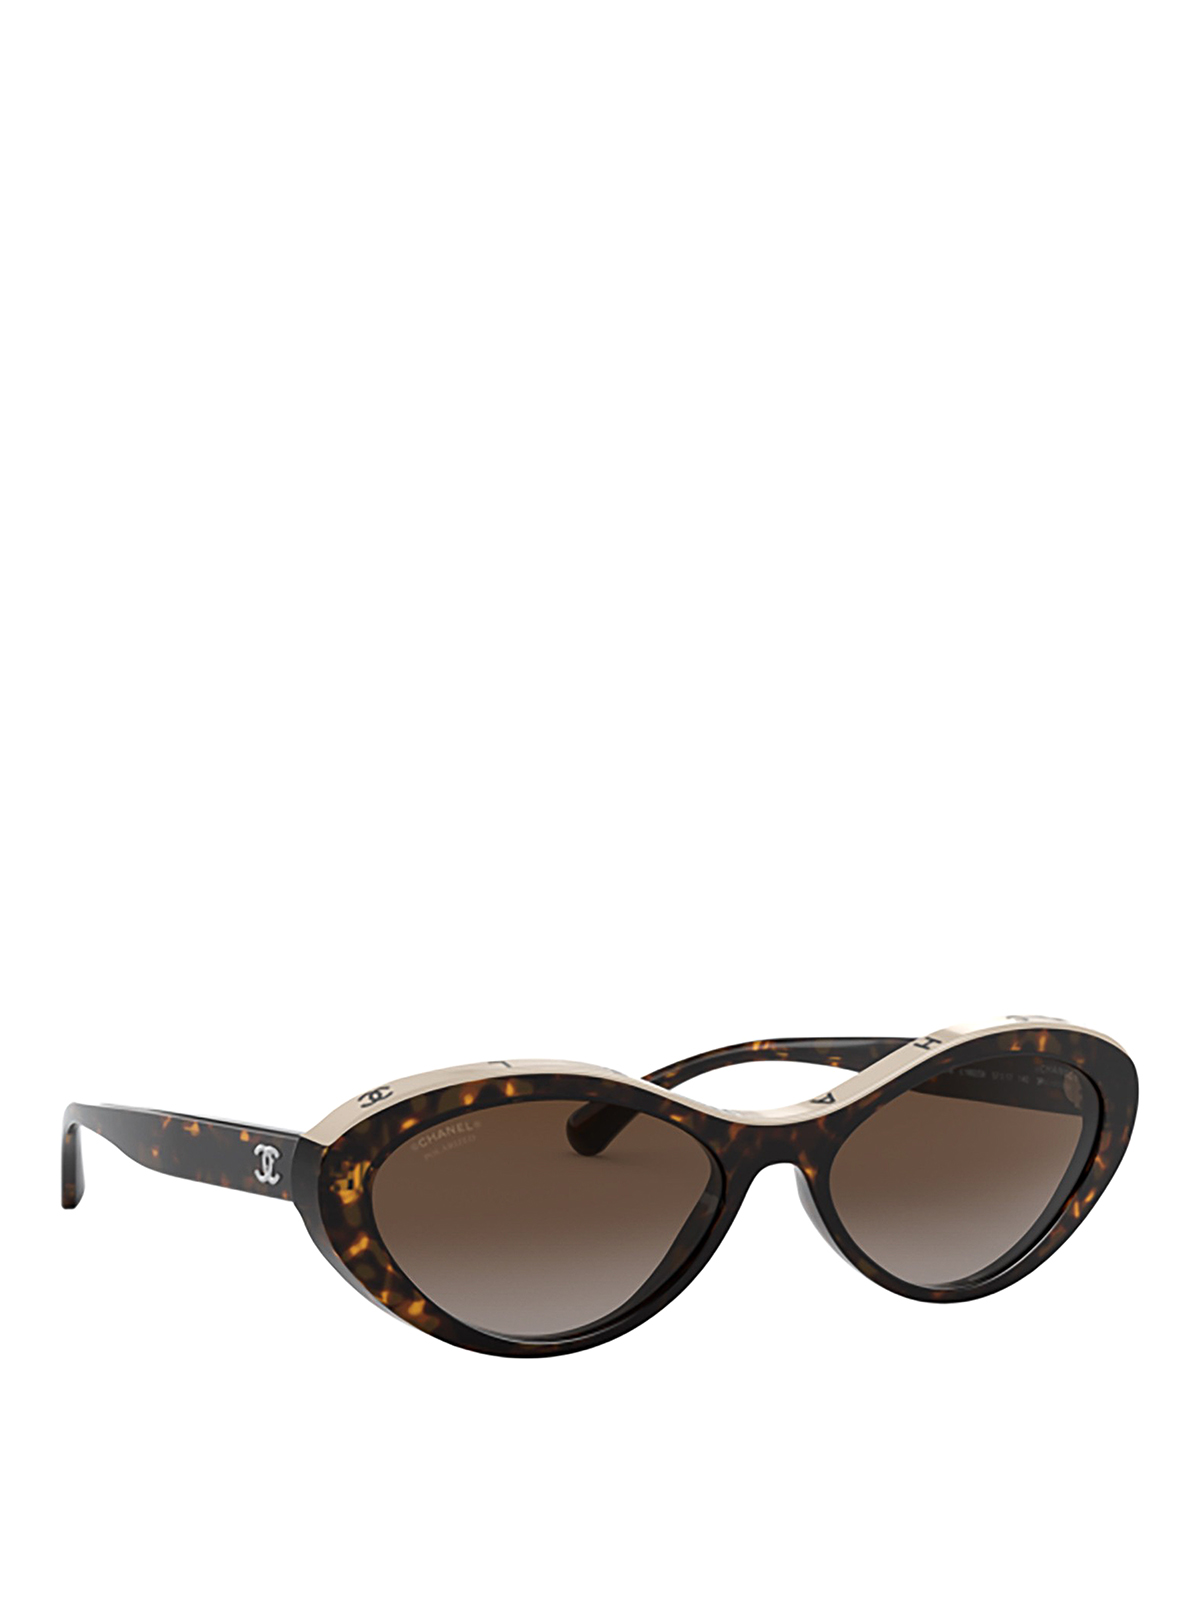 Sunglasses Chanel - Havana cat eye sunglasses - CH54161682S9 | iKRIX.com